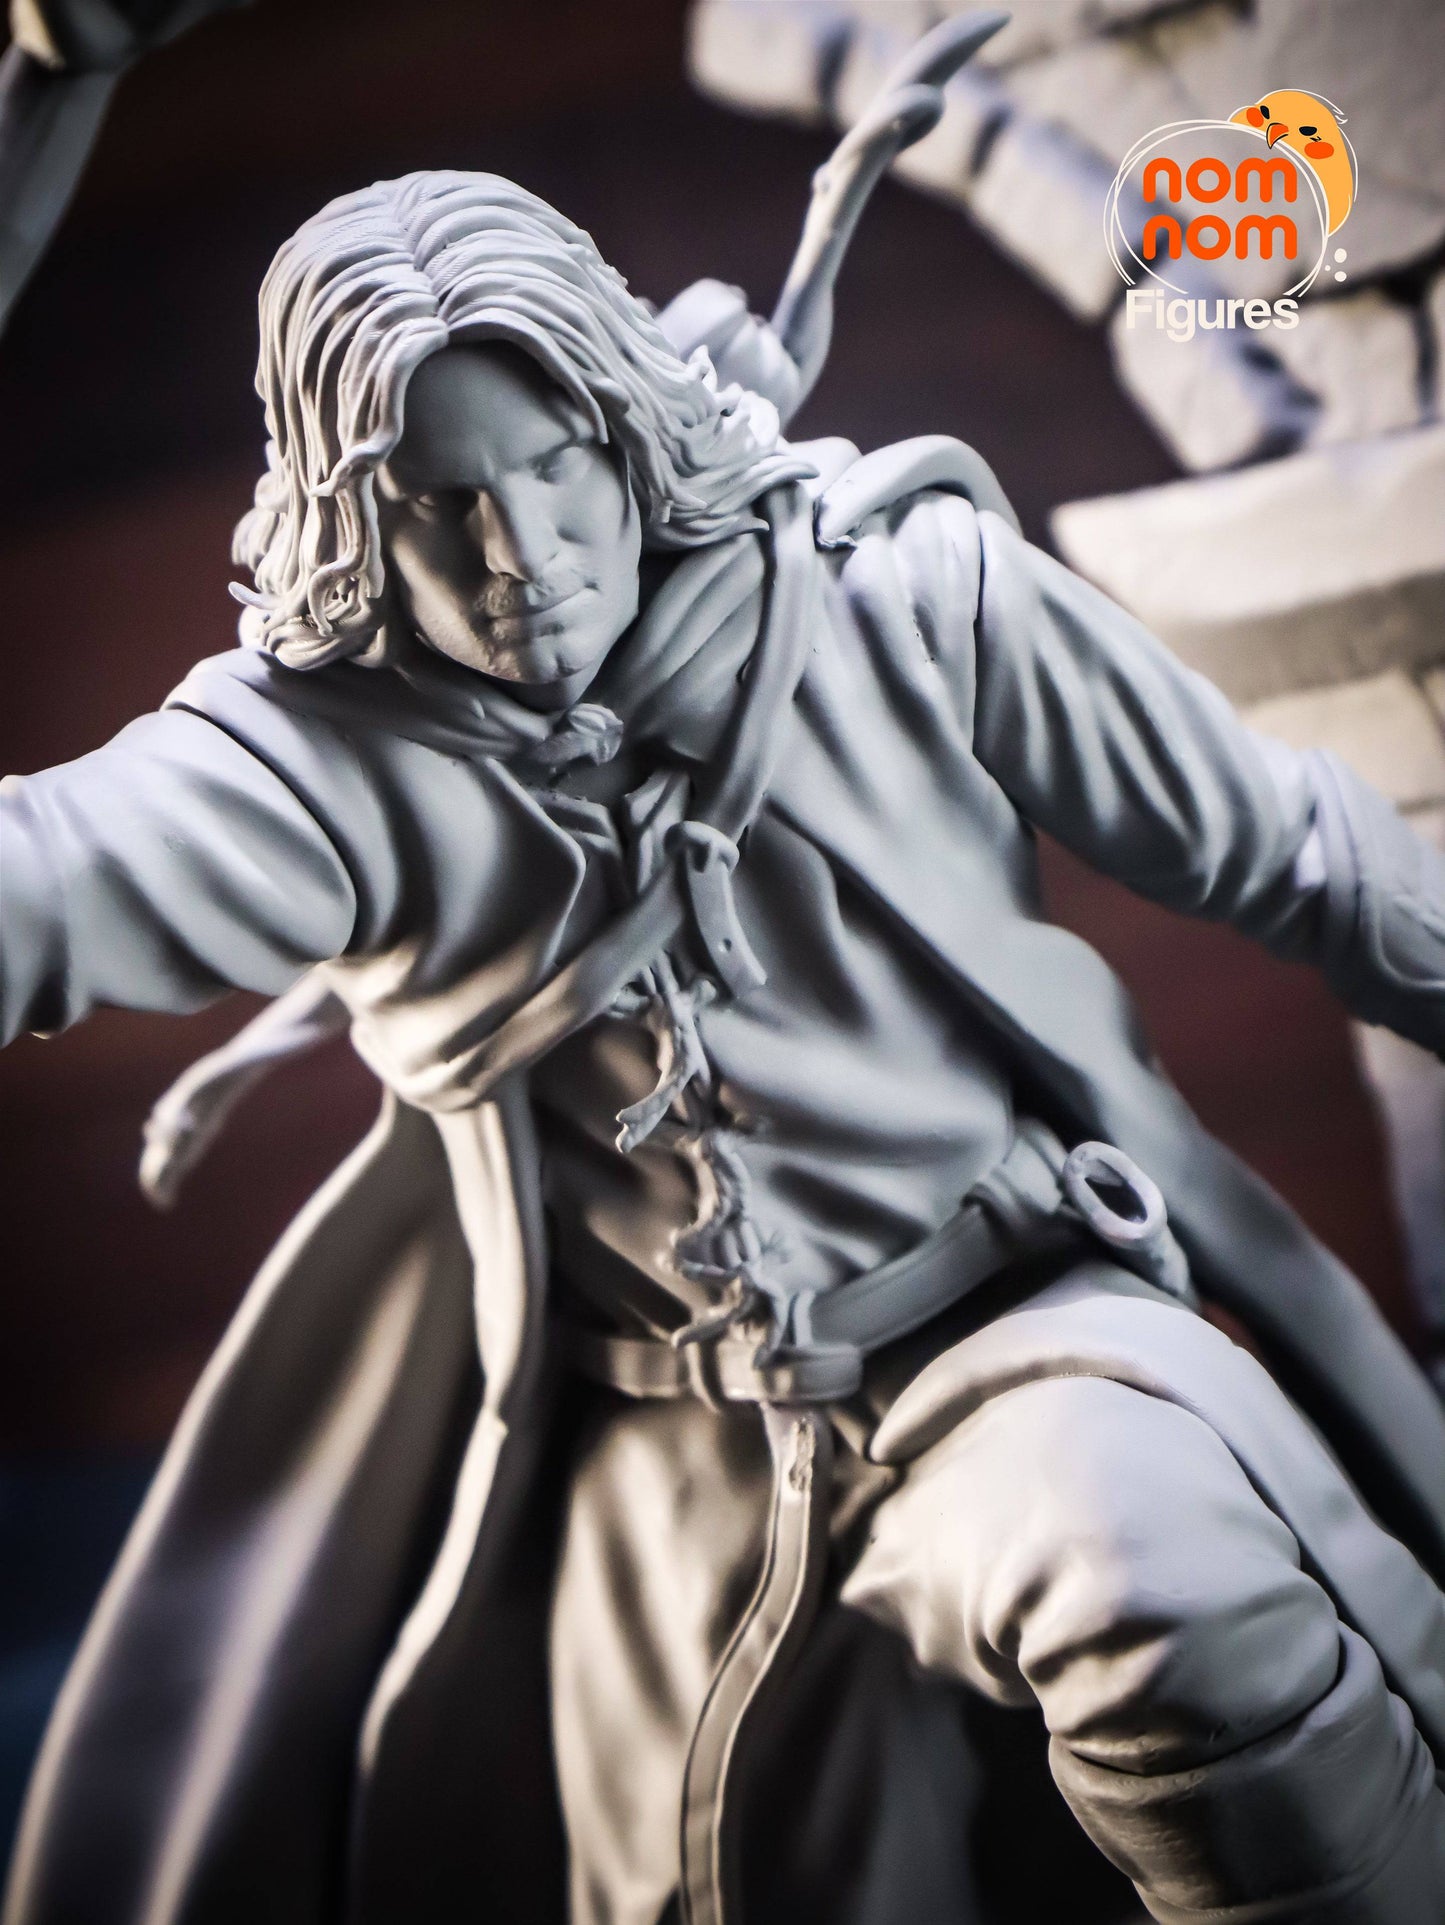 Ranger of the North | Resin Garage Kit Sculpture Anime Video Game Fan Art Statue | Nomnom Figures - Tattles Told 3D